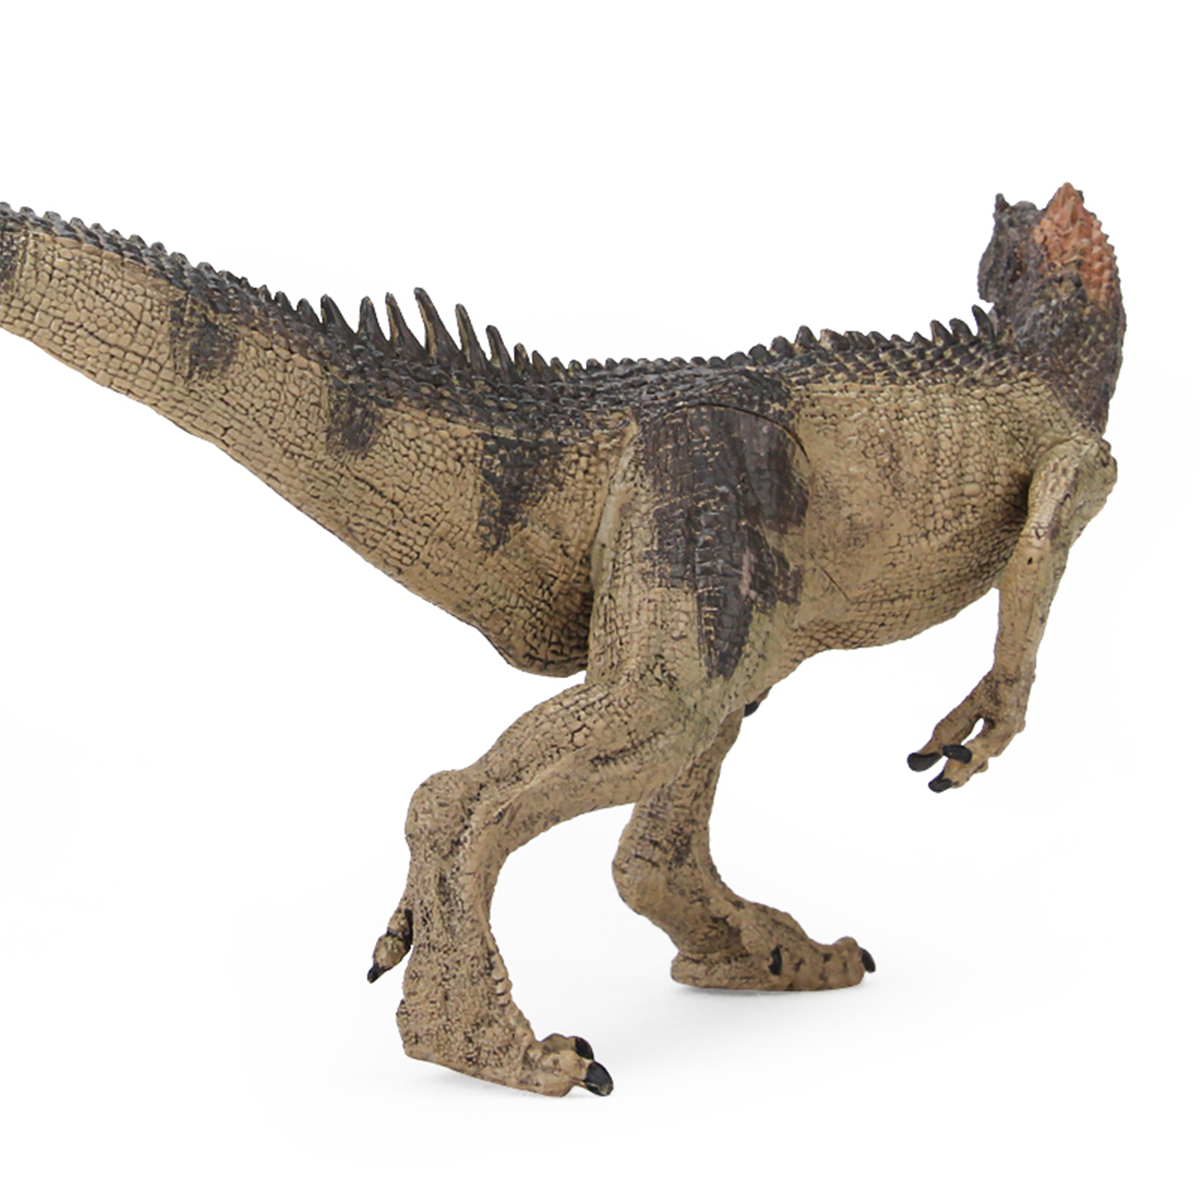 Details about   Realistic Dinosaurs Allosaurus Figure Jurassic Prehistoric Animal Kids Z0D4 D4O1 